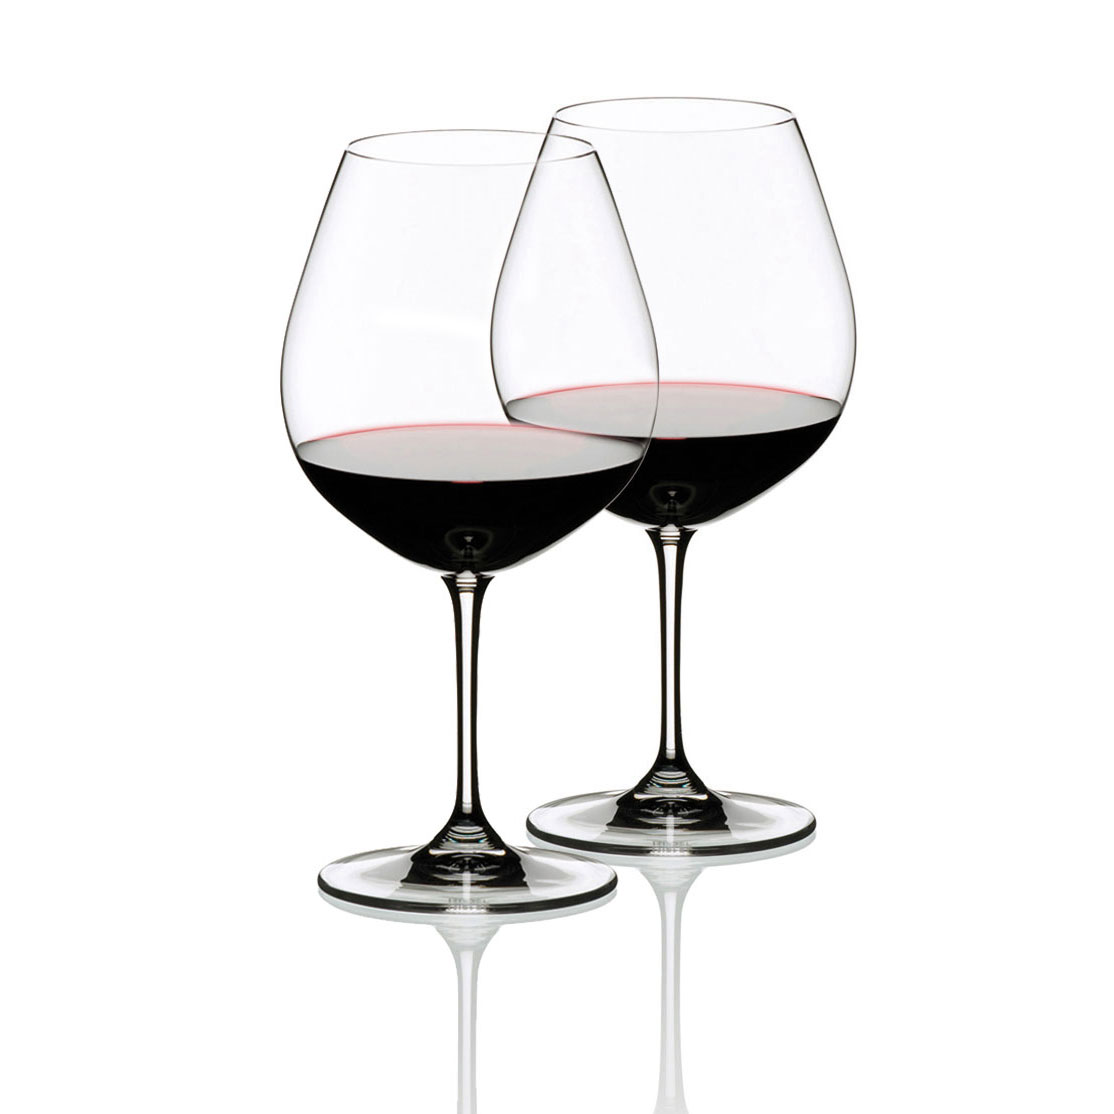 Riedel Vinum Glasses, Burgundy - 2 glasses